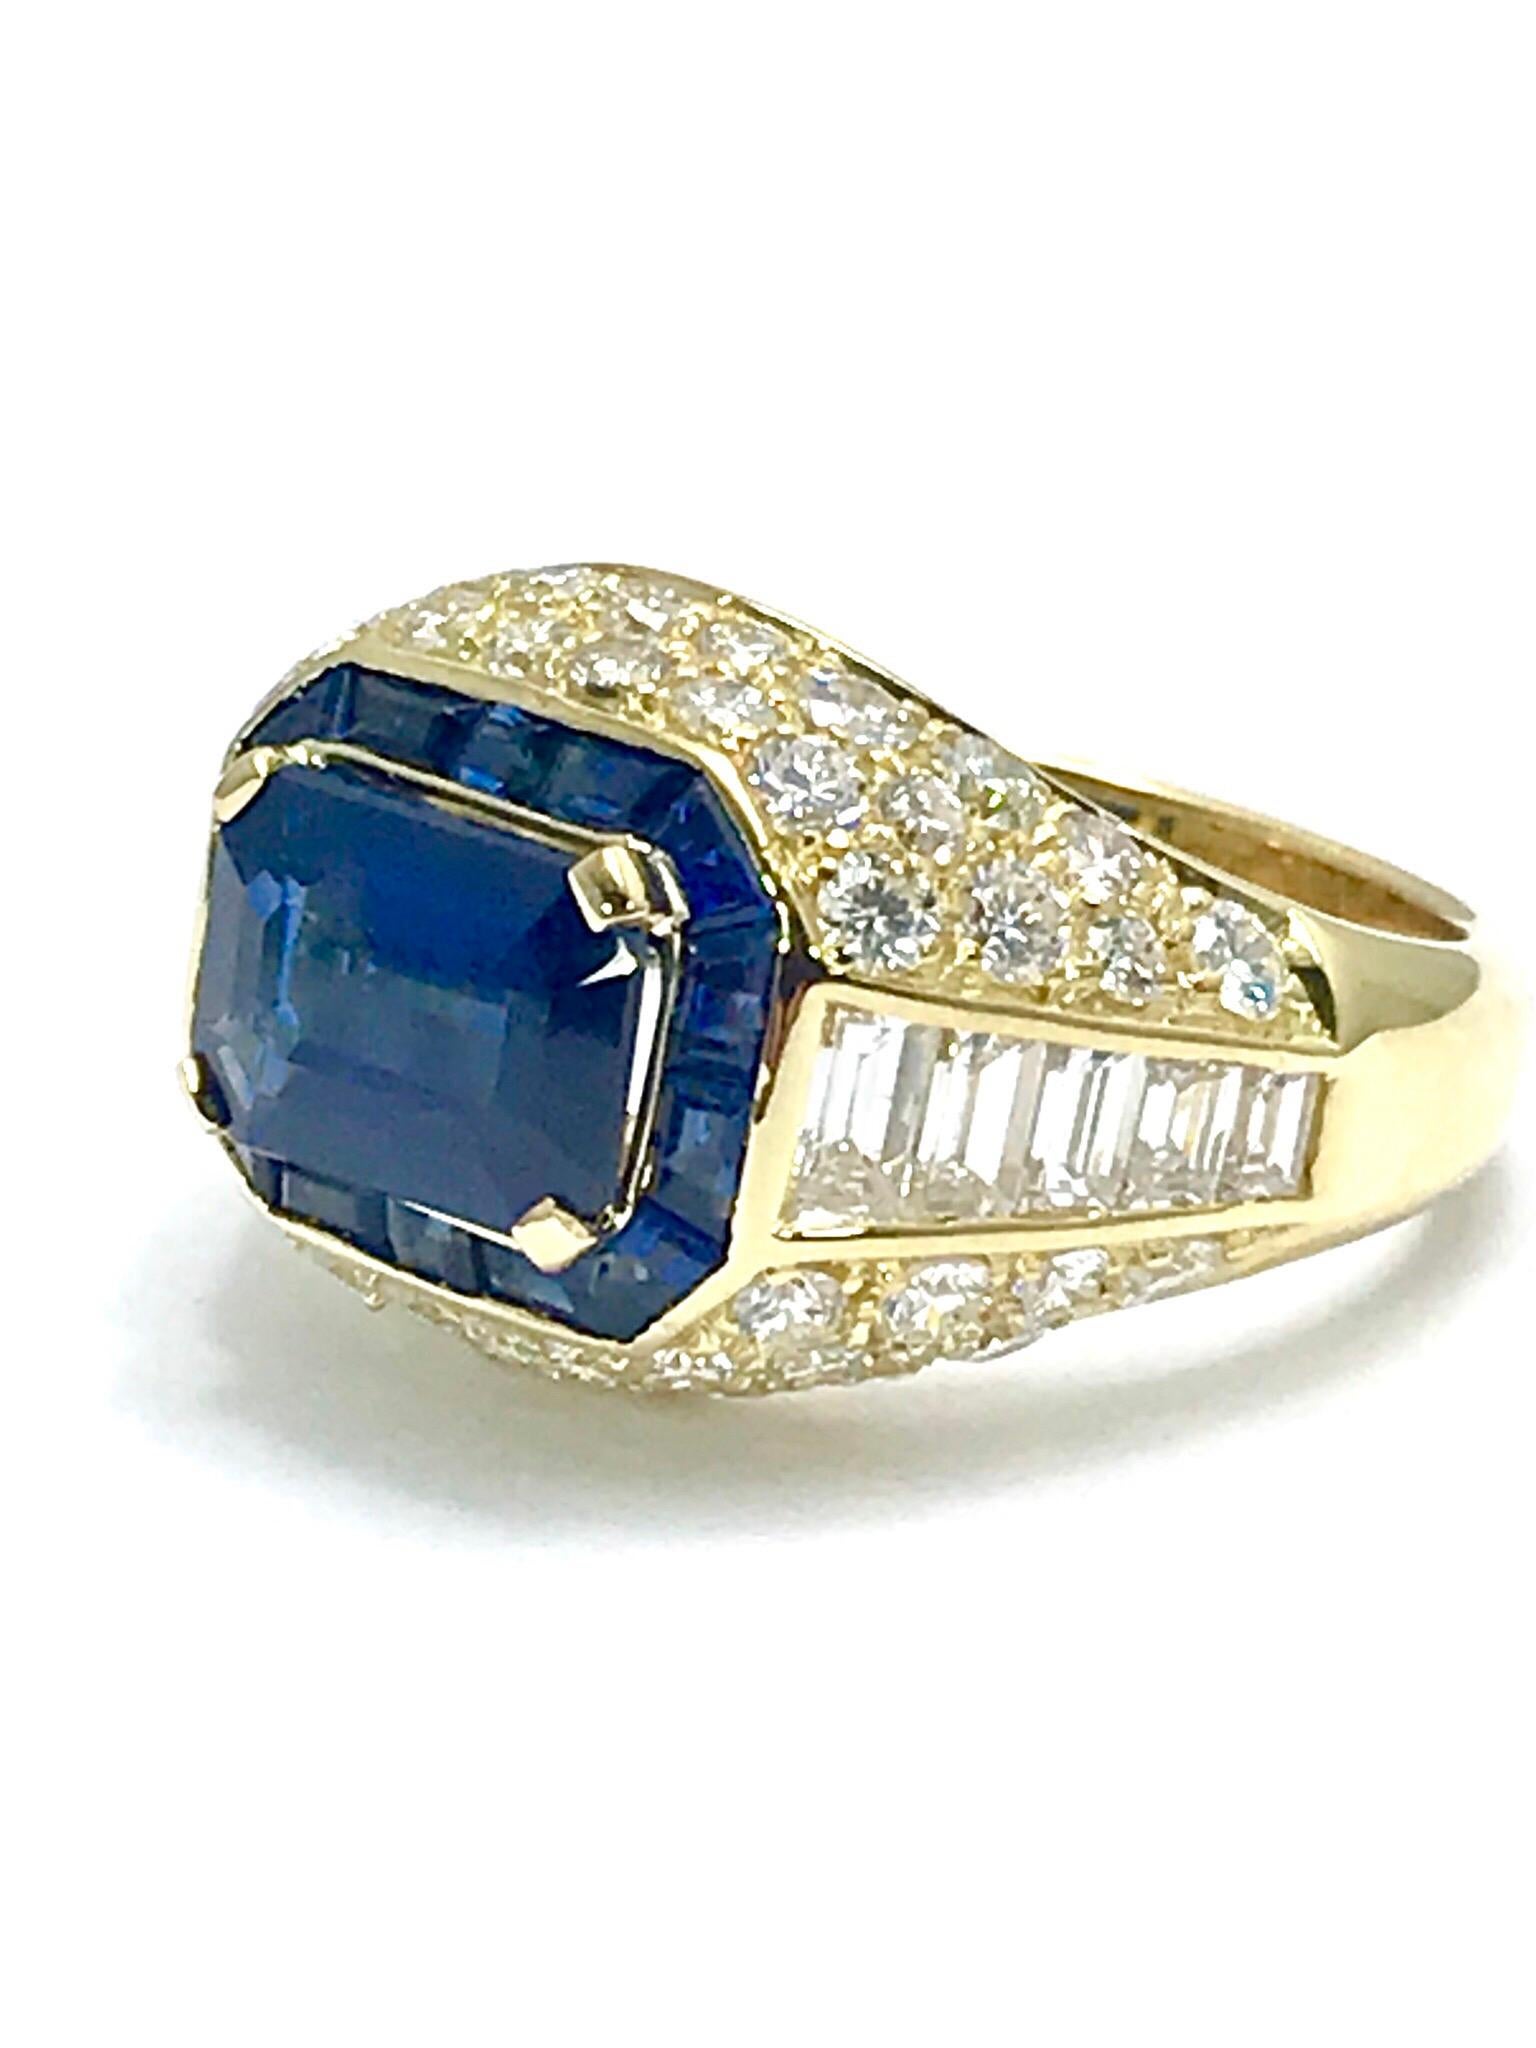 Modernist Picchiotti 2.48 Carat Emerald Cut Sapphire and Diamond Yellow Gold Ring